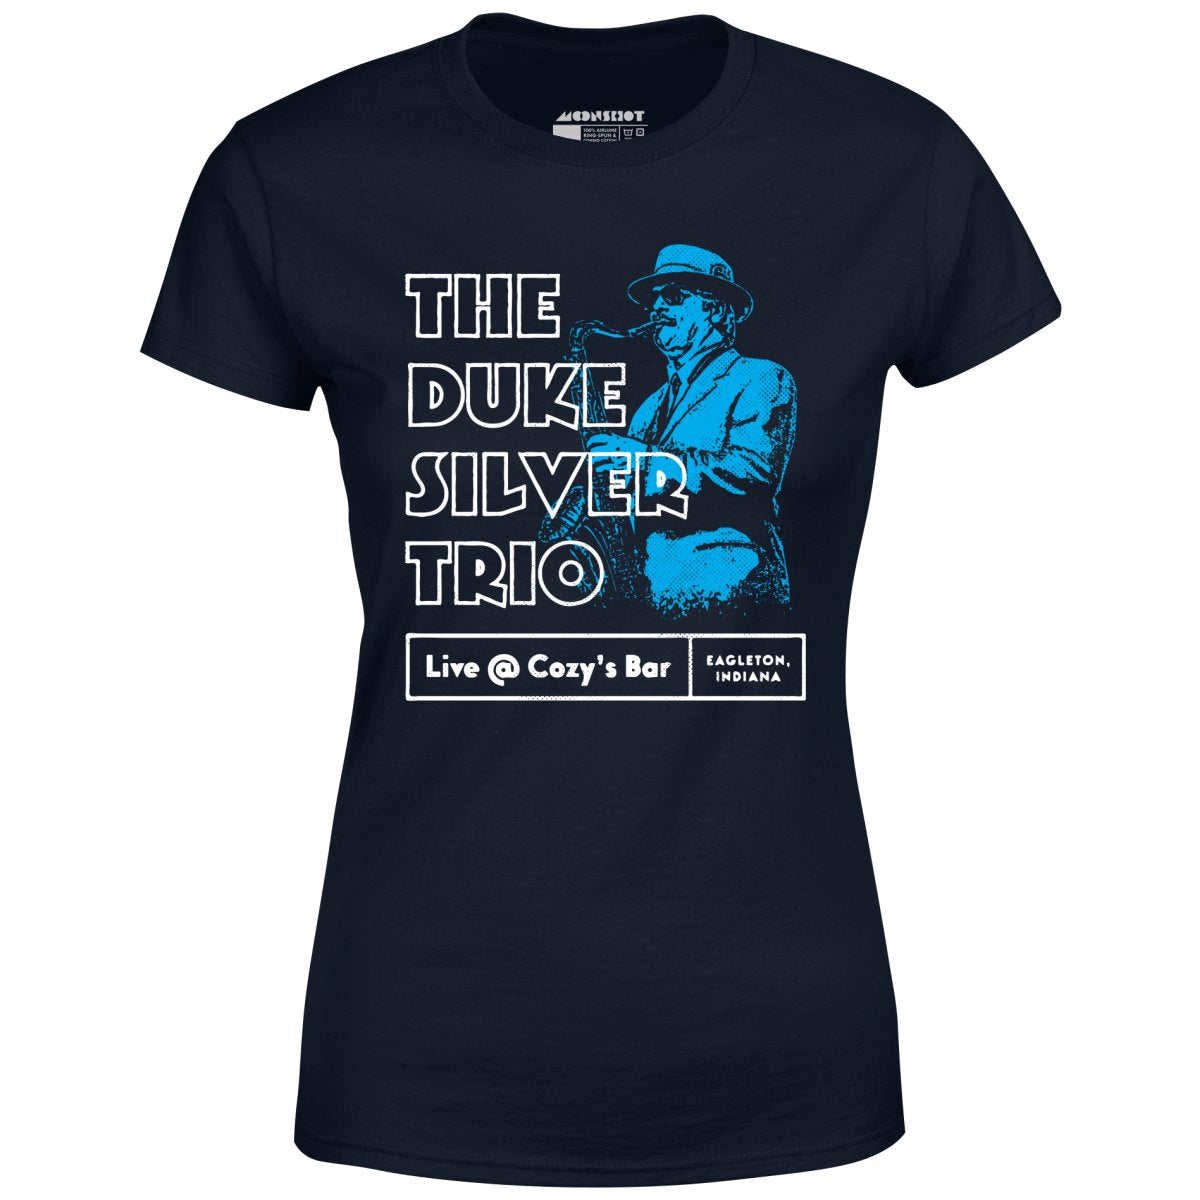 The Duke Silver Trio - Women's T-Shirt